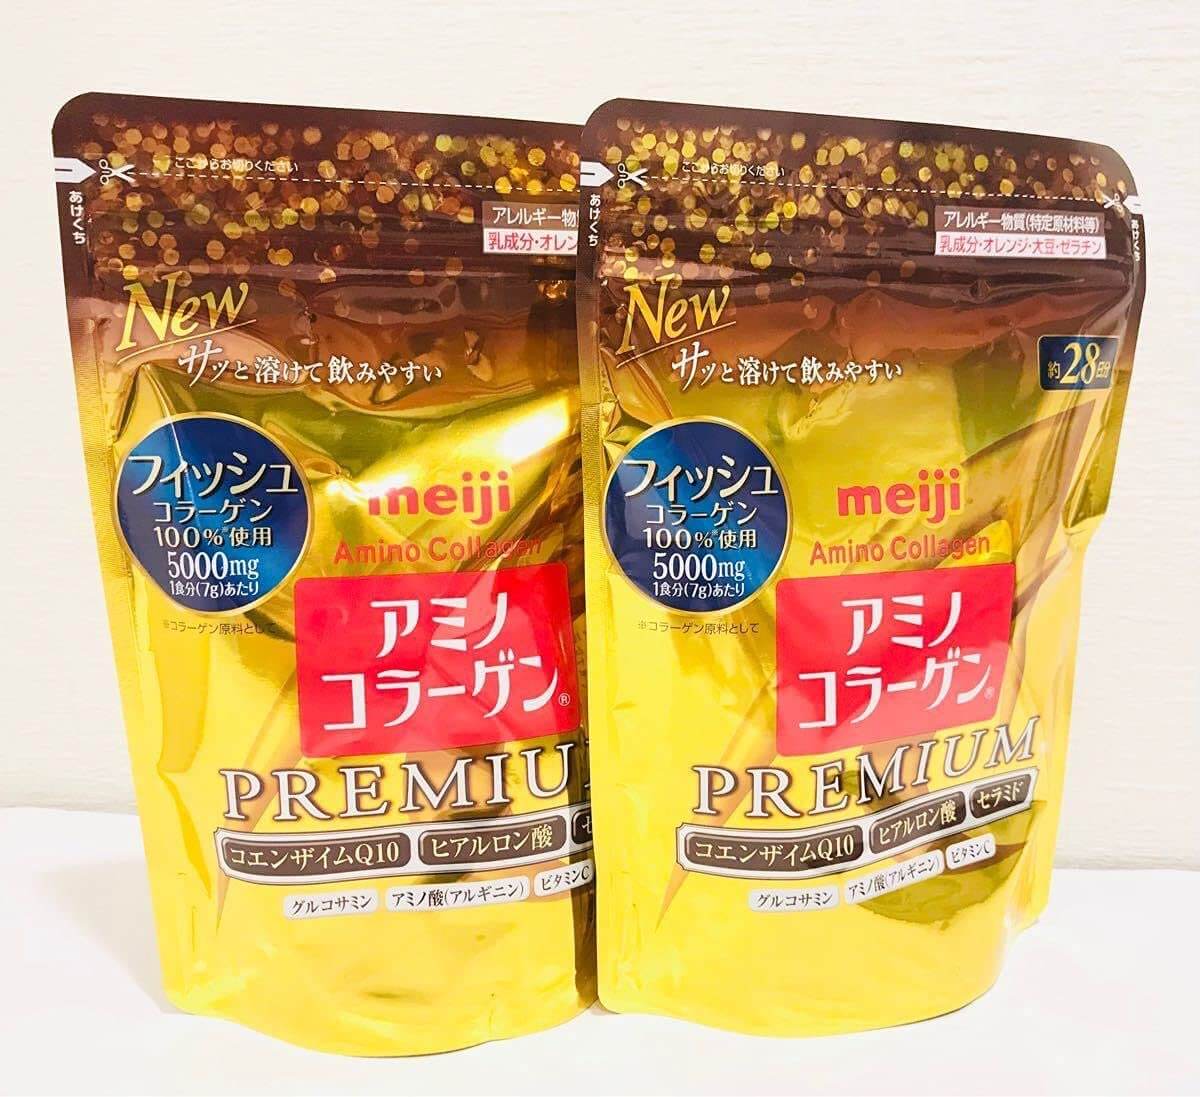 цена Коллаген Meiji Amino Premium Refill, 2 упаковки